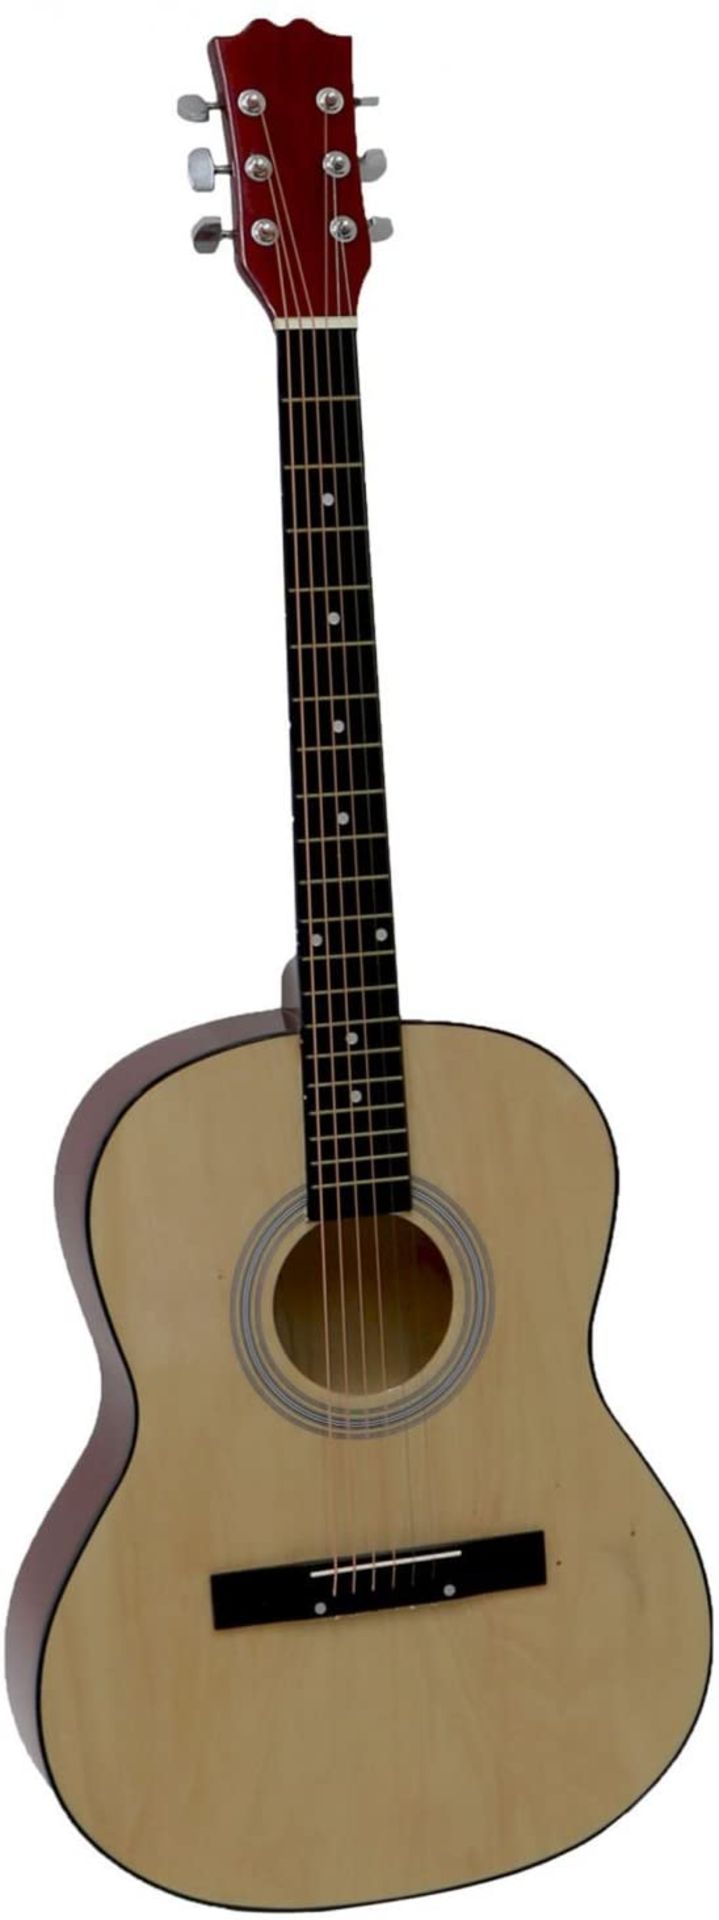 (PP4) 39" Full Size 4/4 6 String Steel Strung Acoustic Guitar Sunset Gold Gloss Varnish Finish...